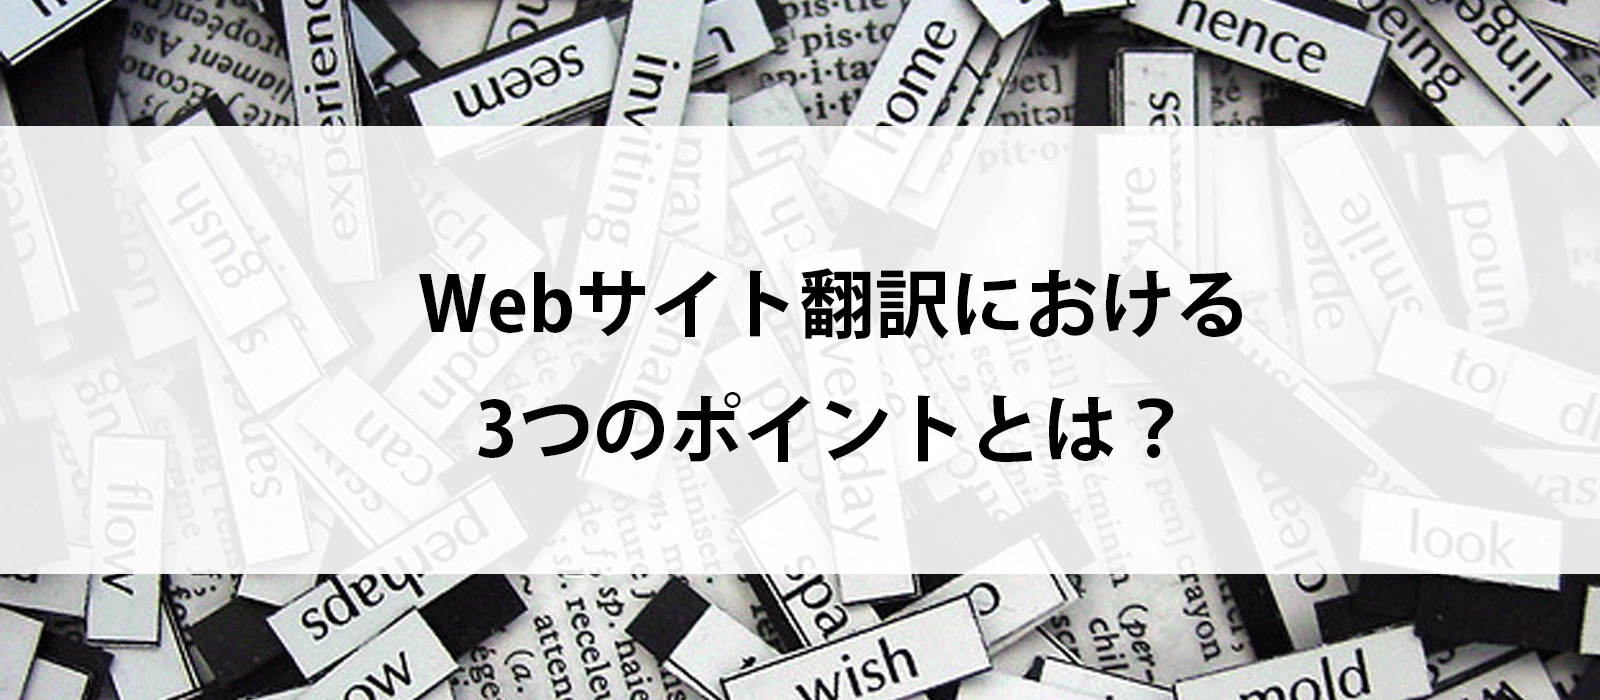 Webサイト翻訳における3つのポイントとは？